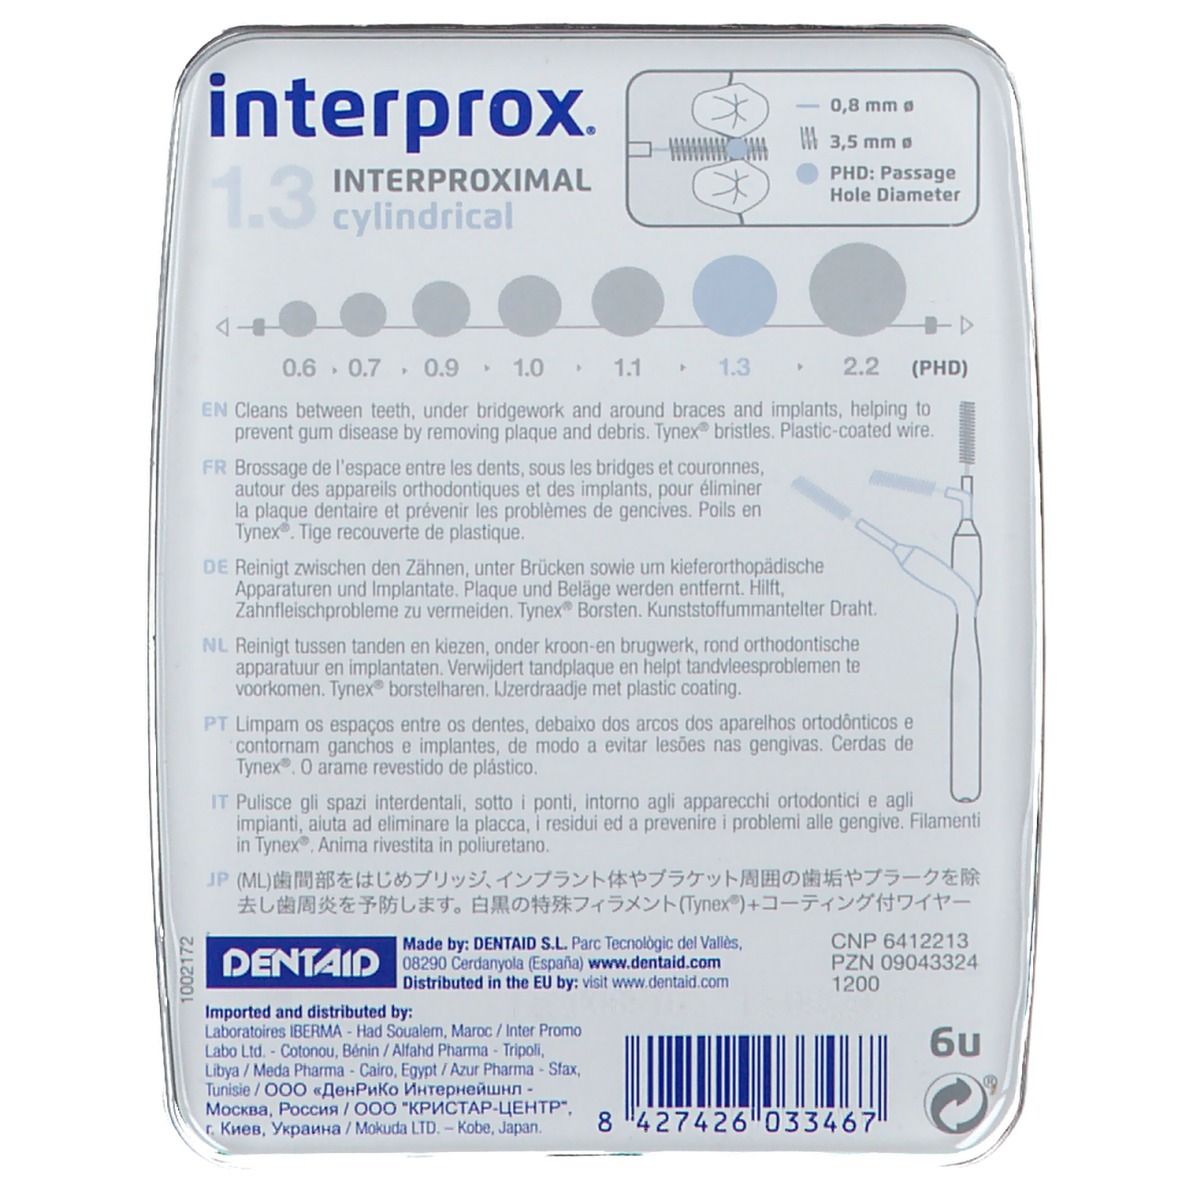 interprox® cylindrical weiß 1,3 mm